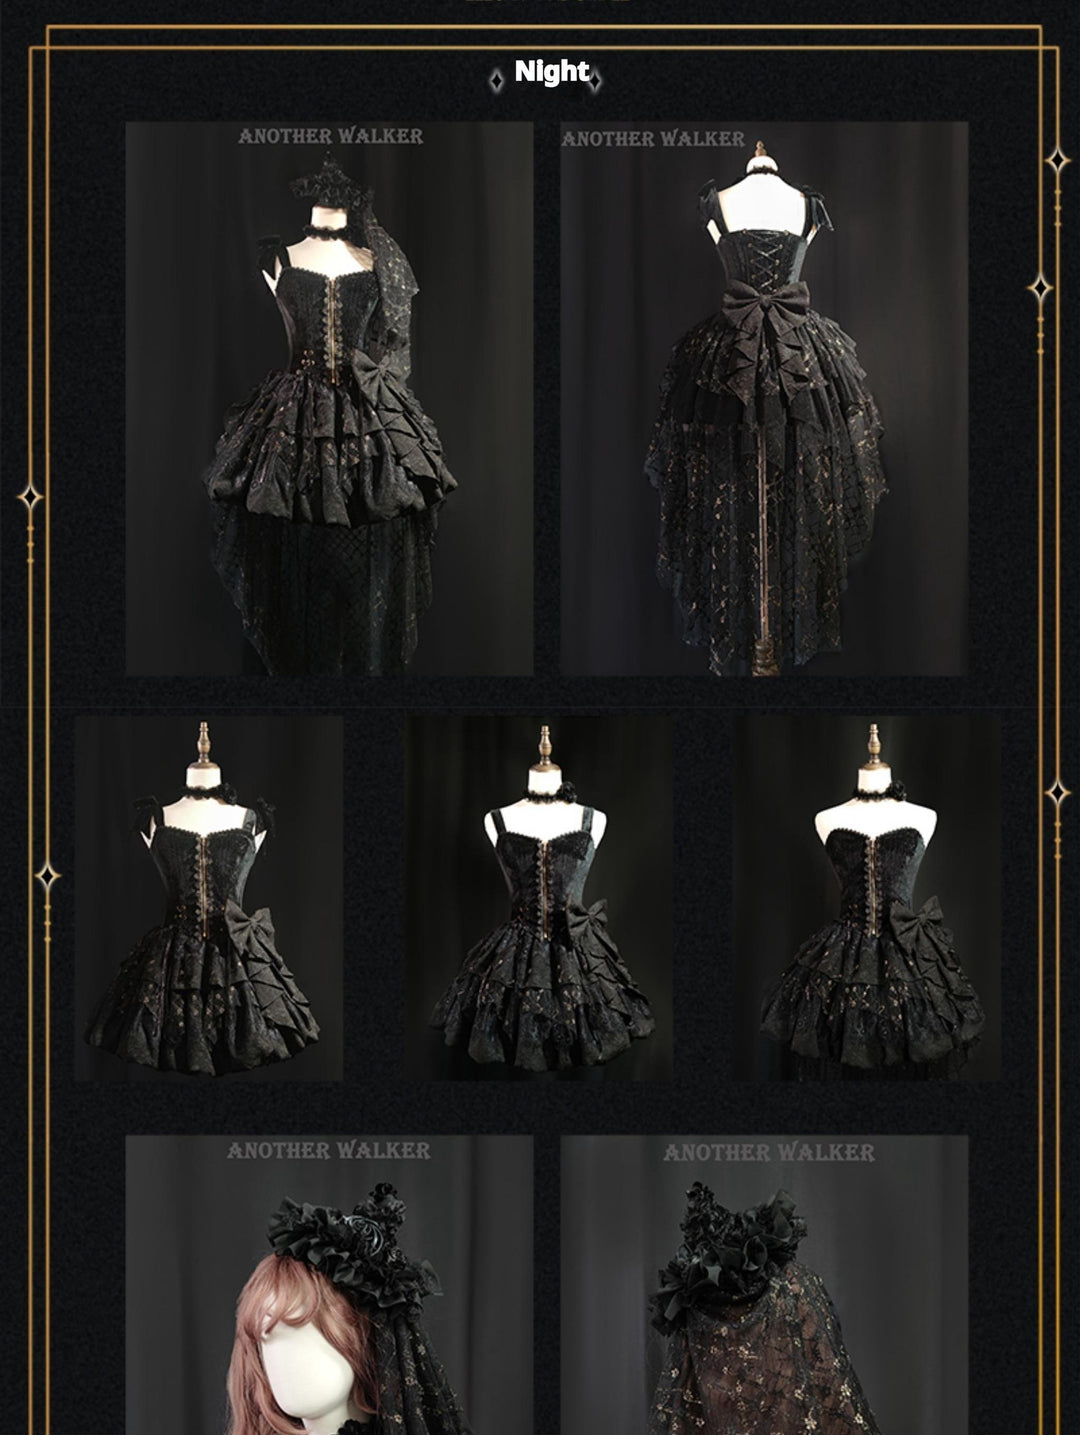 Another Walker~Night and Night Furan~Gothic Lolita Fishtail Skirt Set Black Lolita Set   